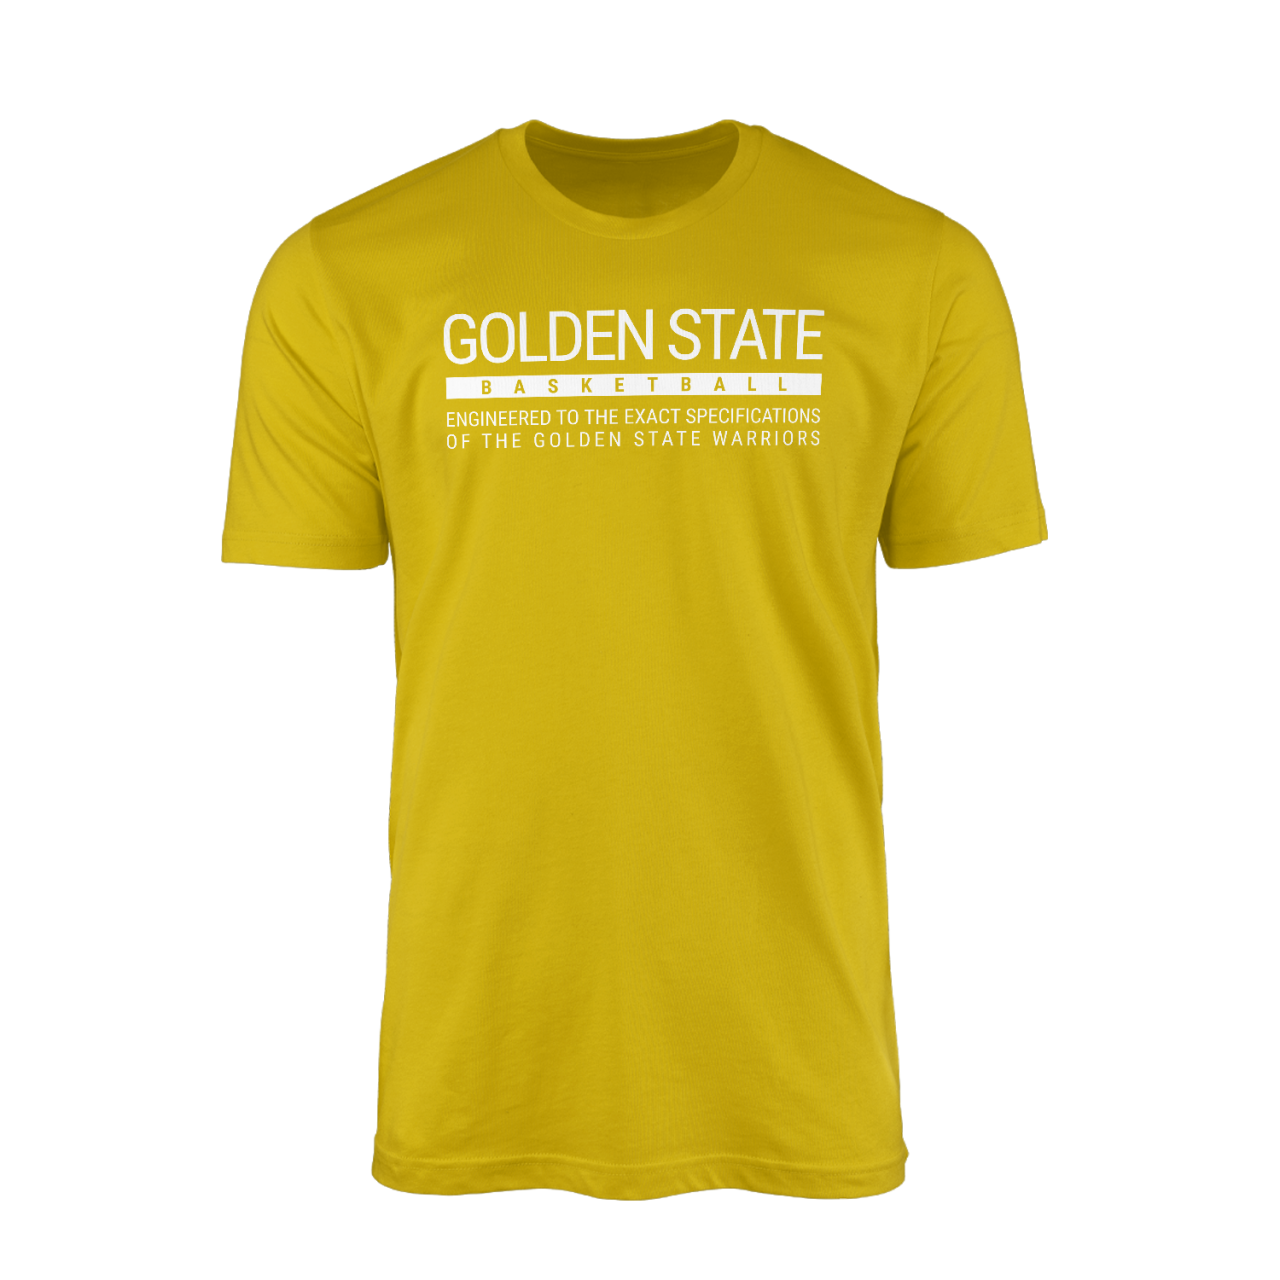 Golden State Basketball Sarı Tshirt